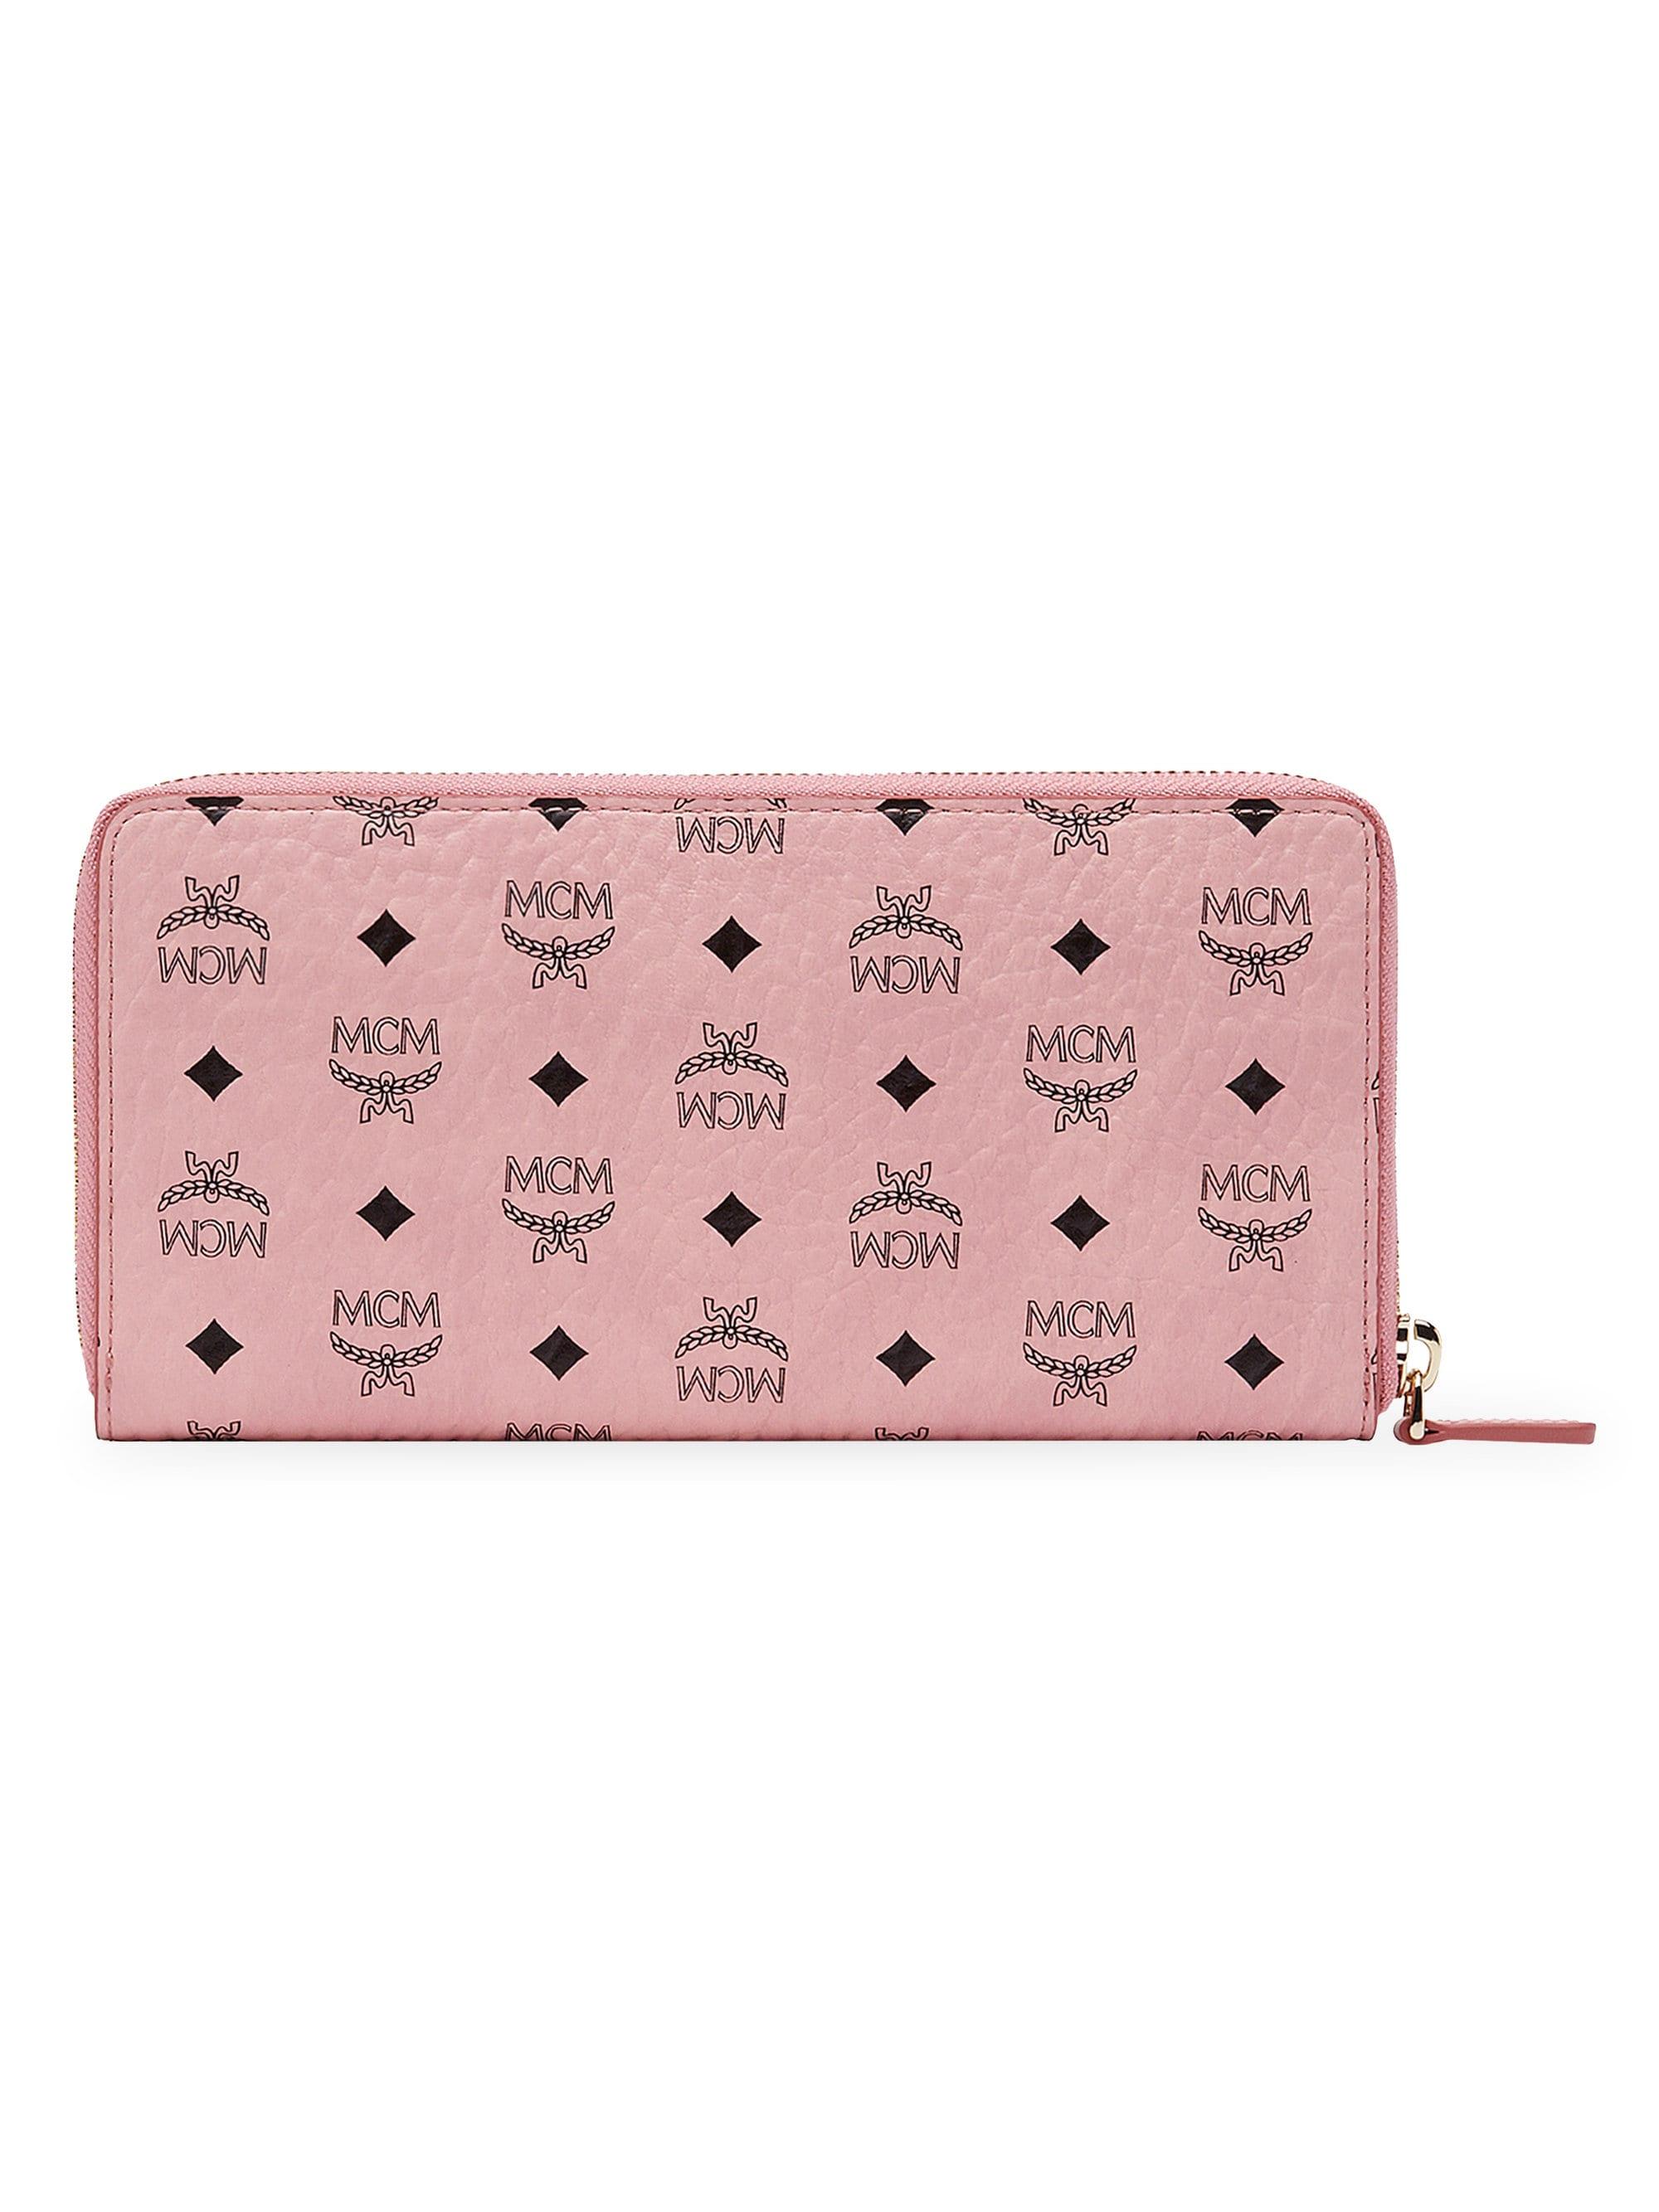 MCM Large Visetos Original Leather Zip-around Wallet in Pink | Lyst